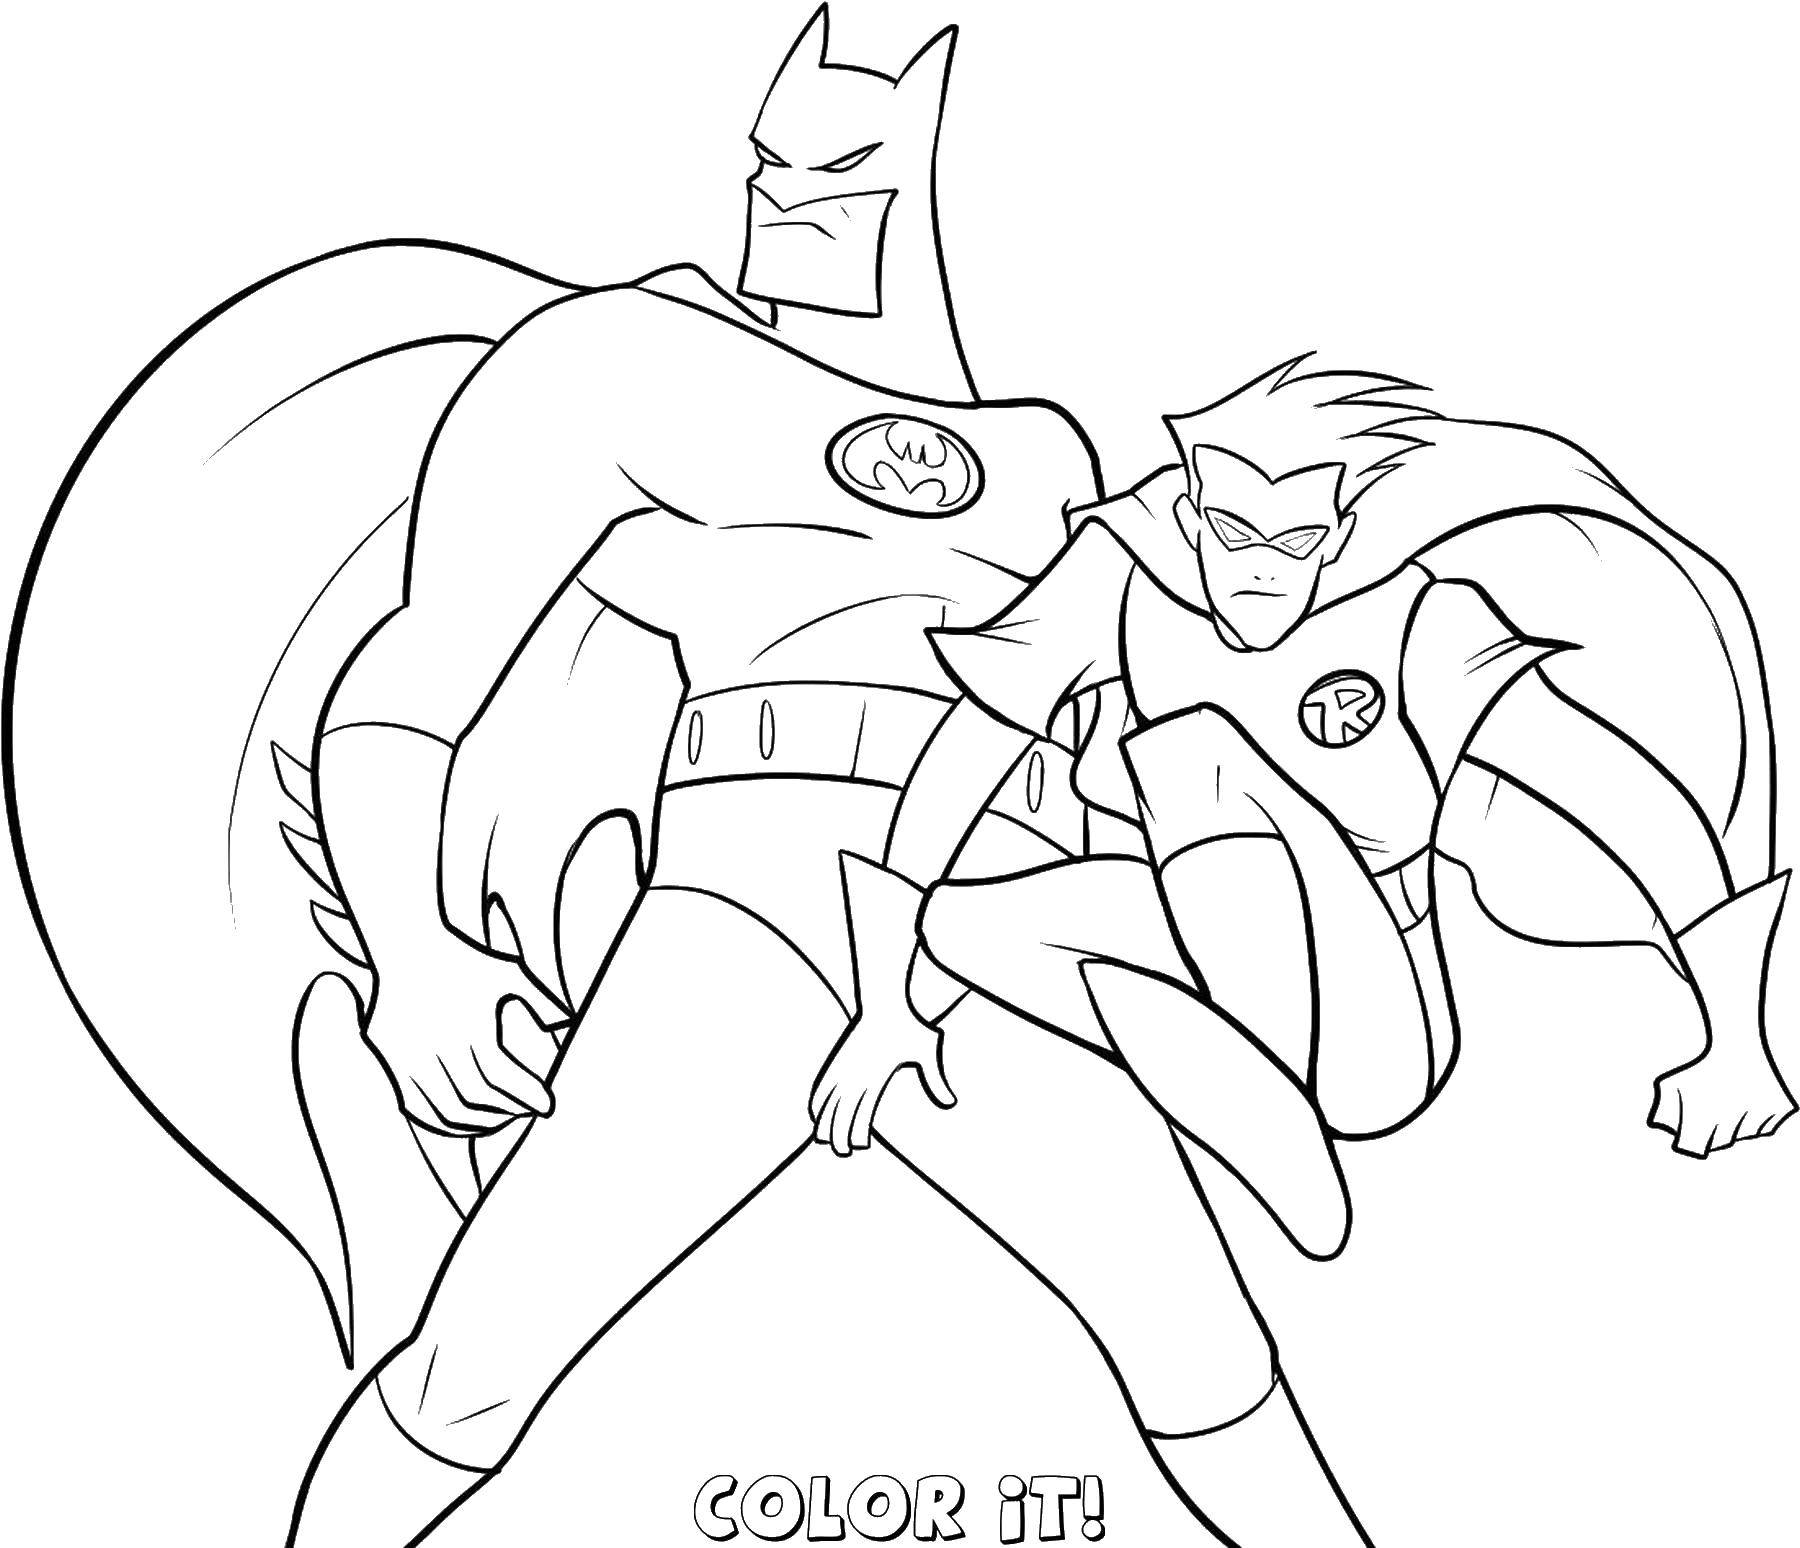 Название: Раскраска Бэтмен и робин спешат на помошь. Категория: бэтмен. Теги: Бэтмен, супергерои.